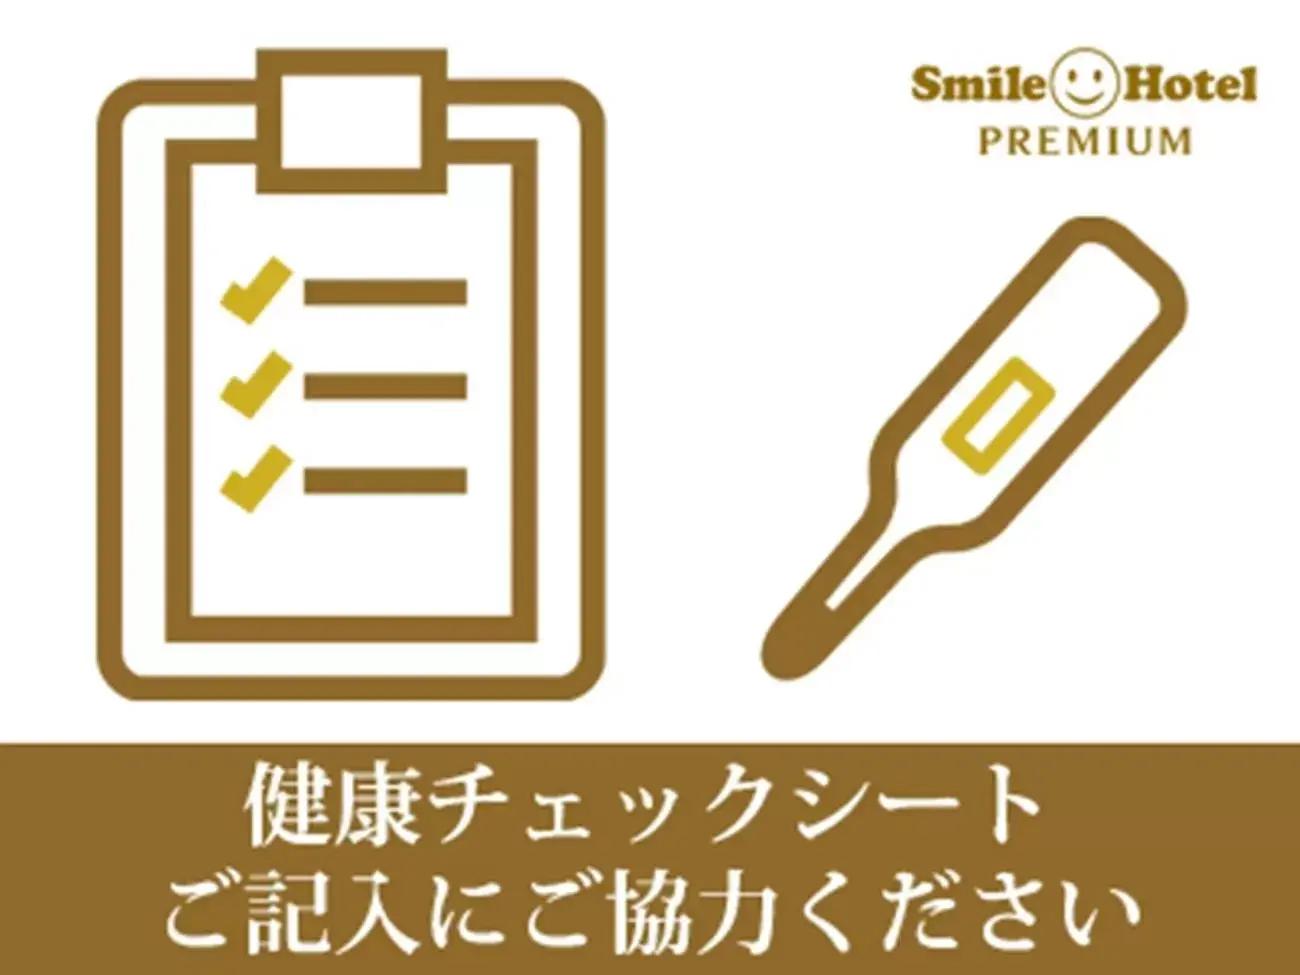 Area and facilities in Smile Hotel Premium Hakodate Goryokaku